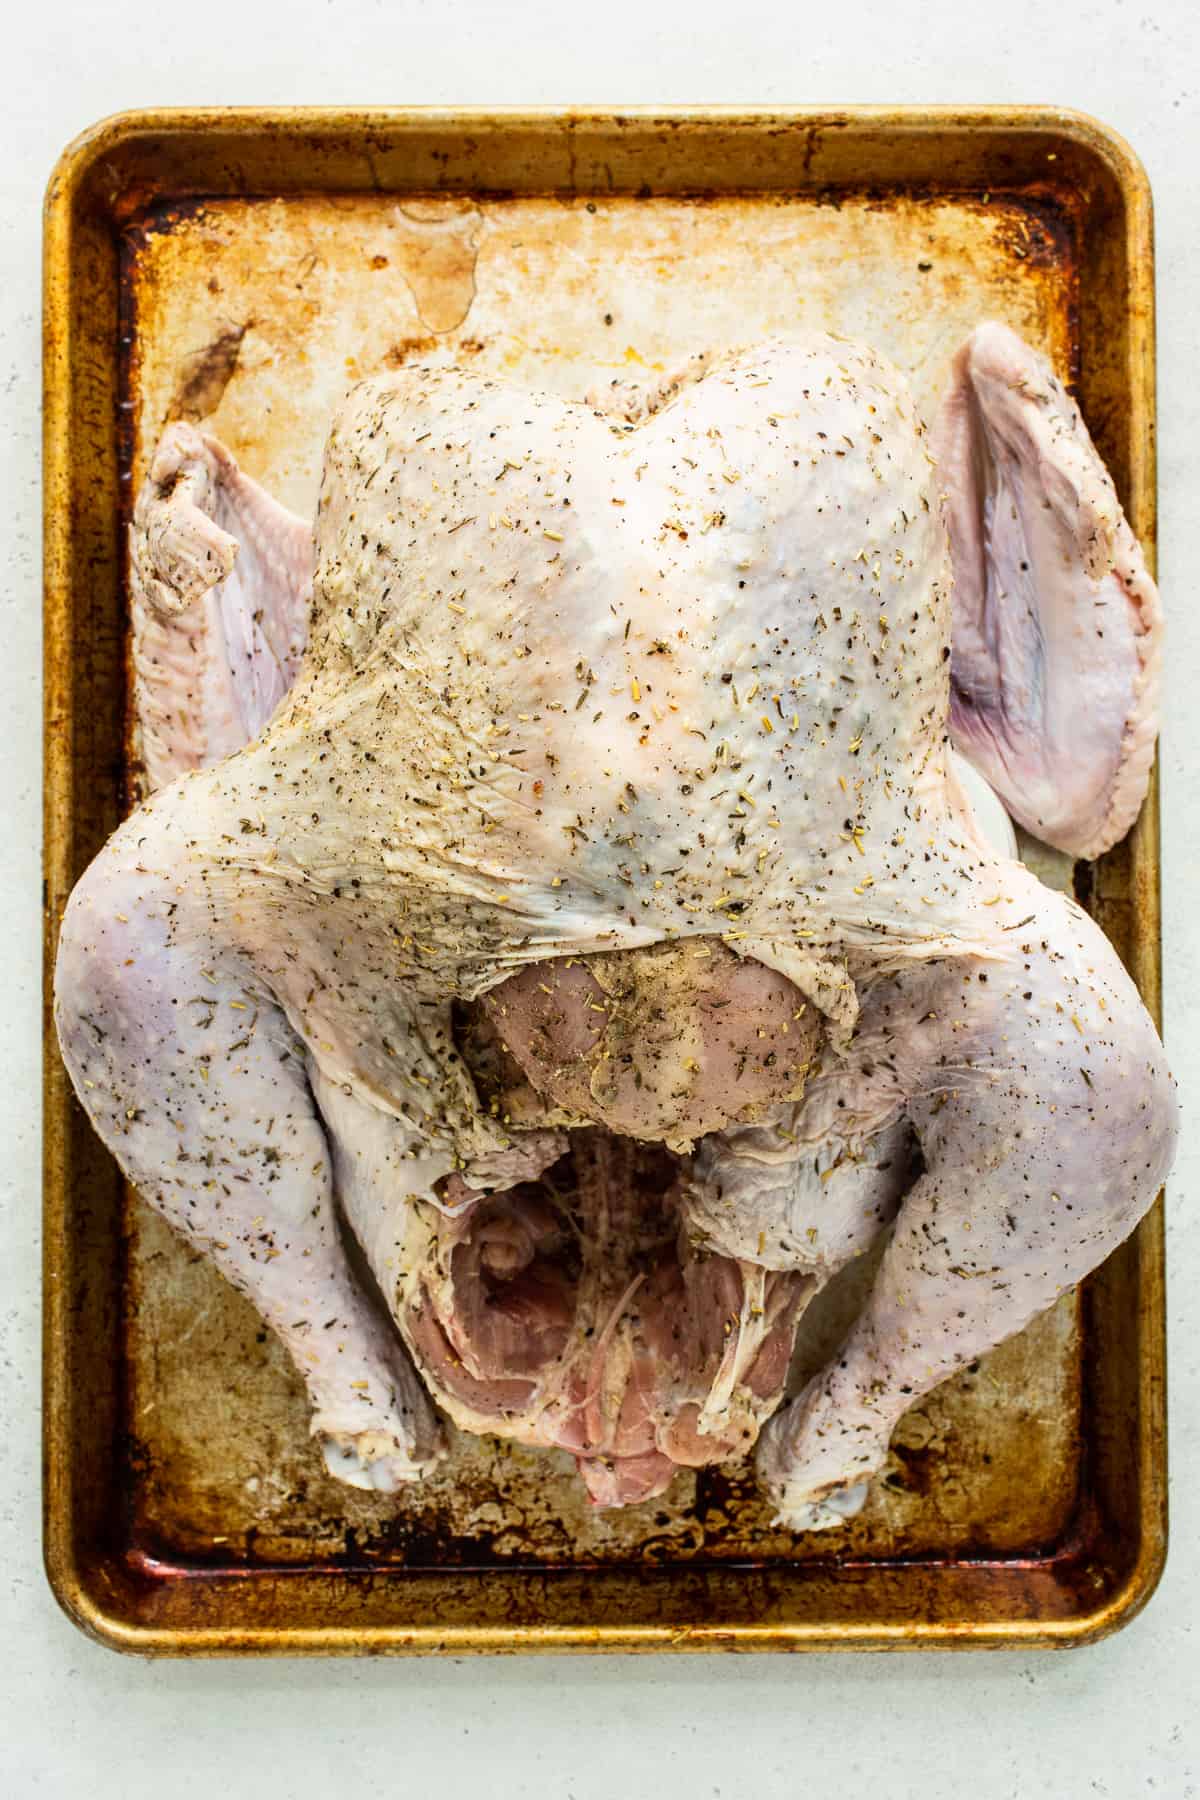 Raw turkey on a baking sheet.